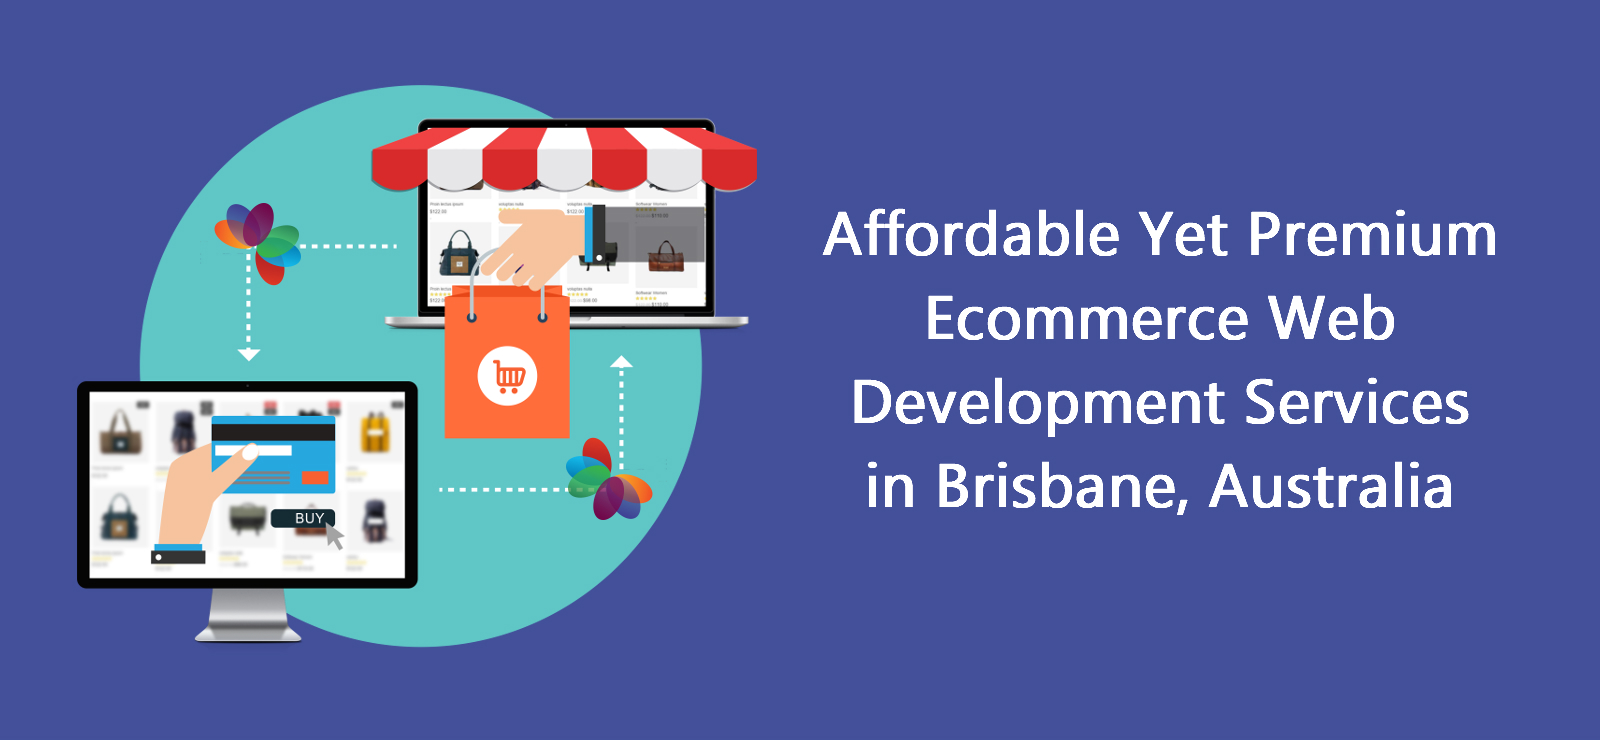 Affordable Yet Premium Ecommerce Web Development Services in Brisbane, Australia